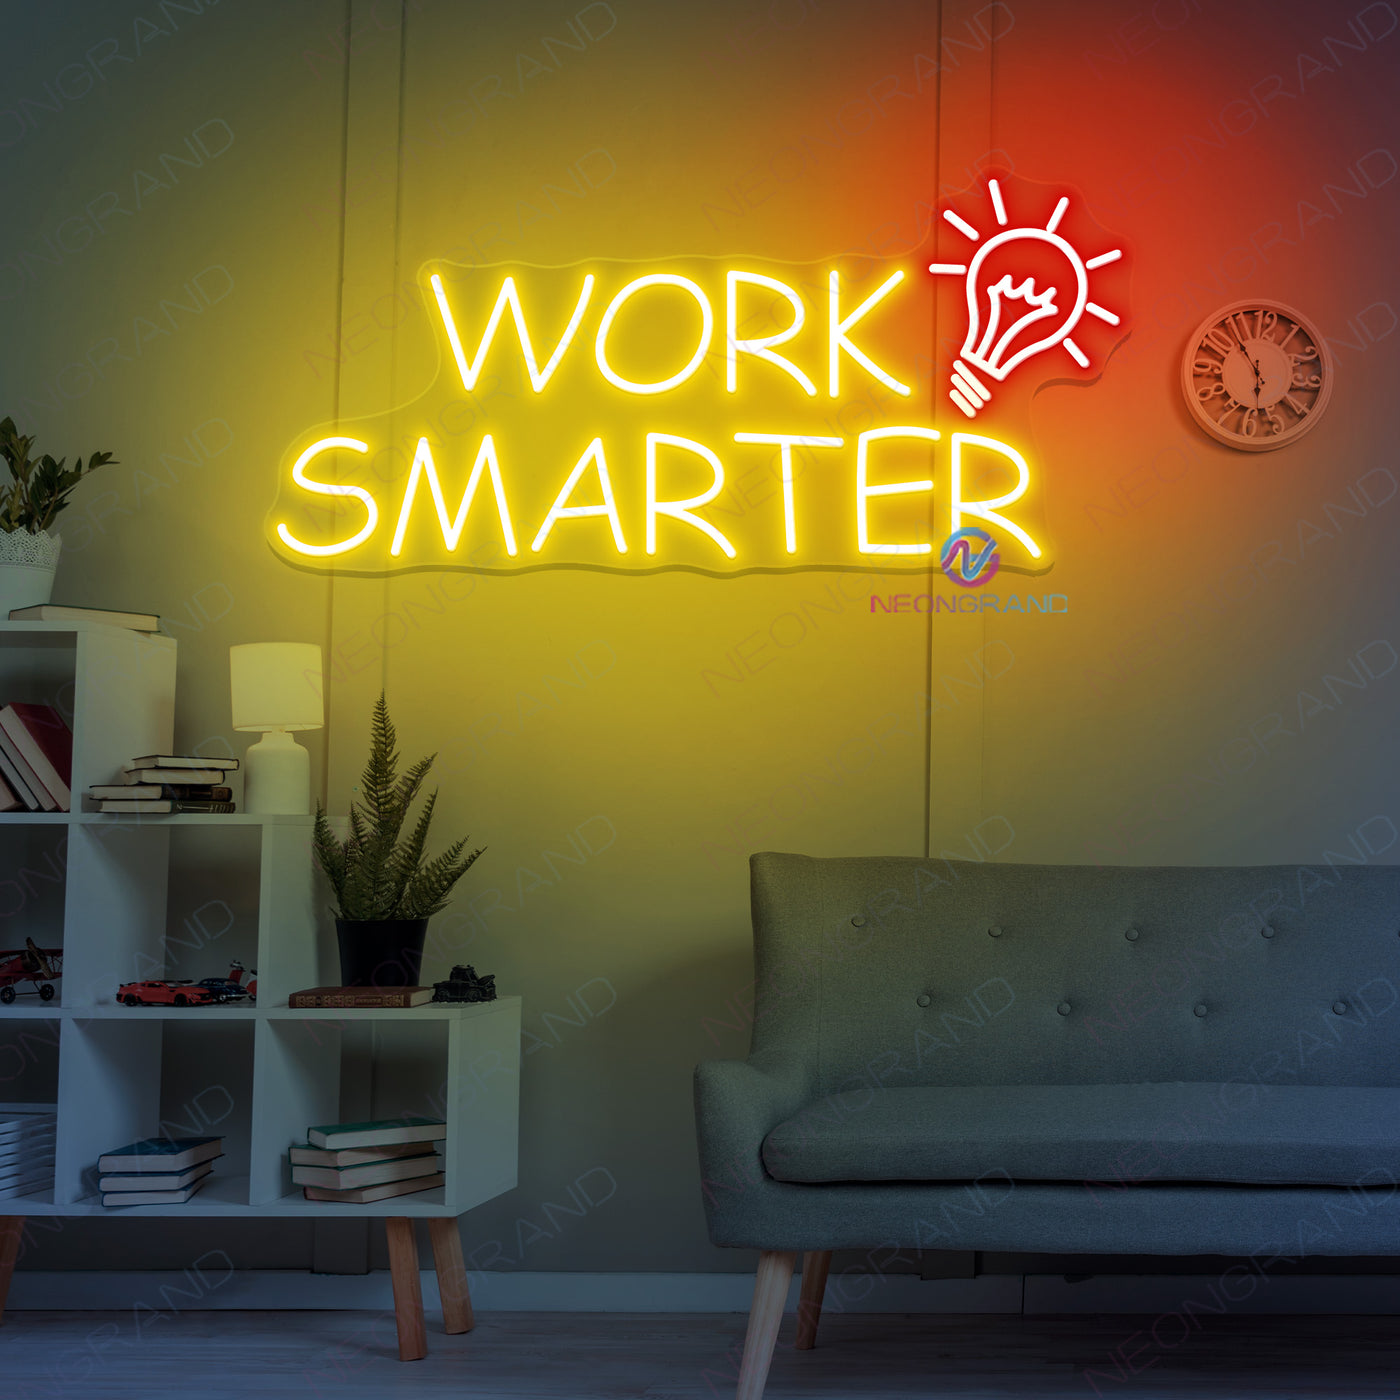 Work Smarter Neon Sign Inspirational Led light